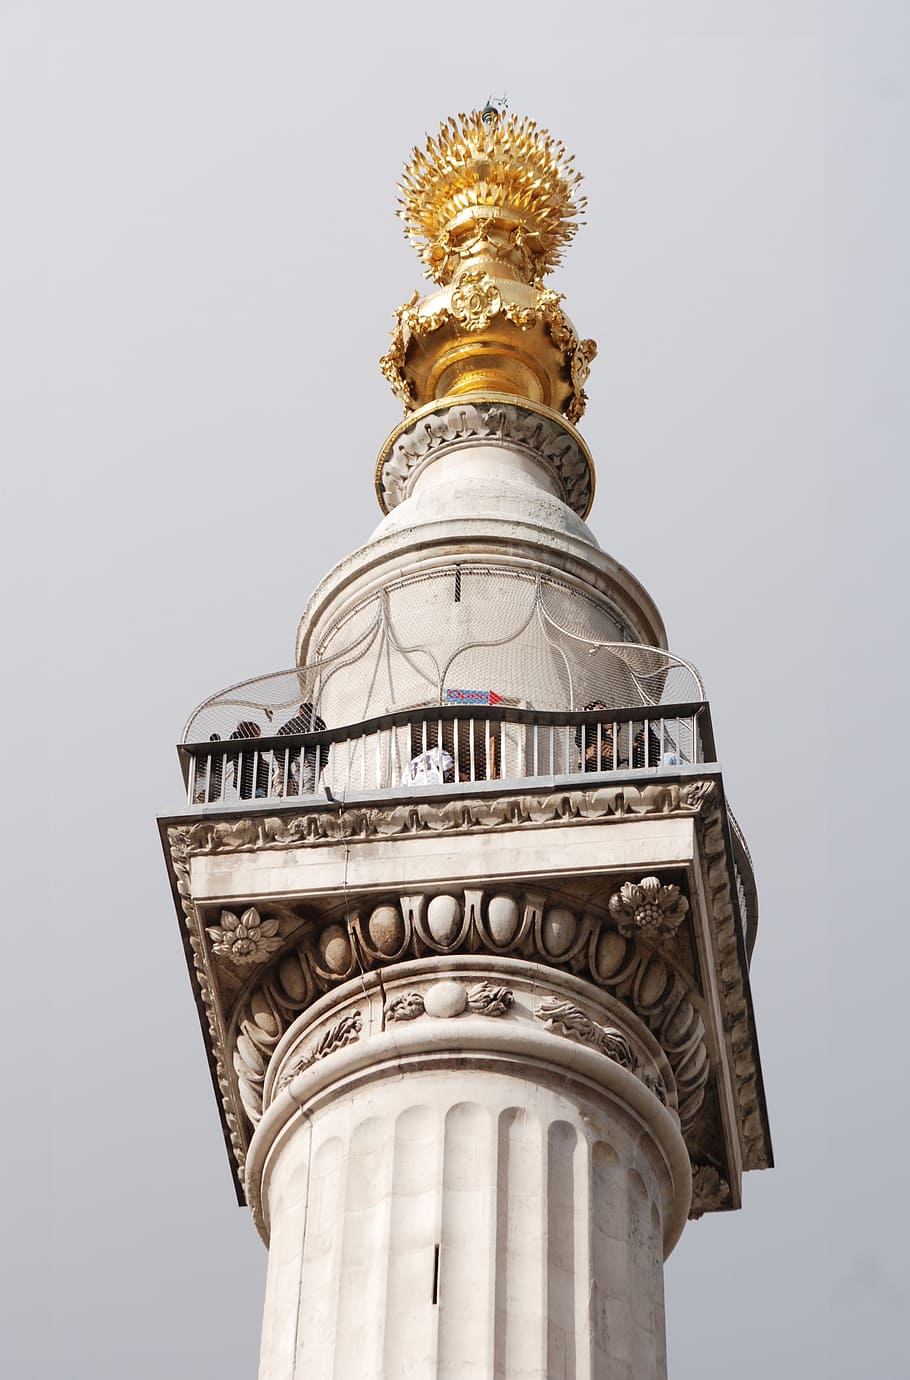 Monumento, Gran, Fuego, Londres, columna dórica, color oro, estatua, arquitectura, oro, exterior del edificio